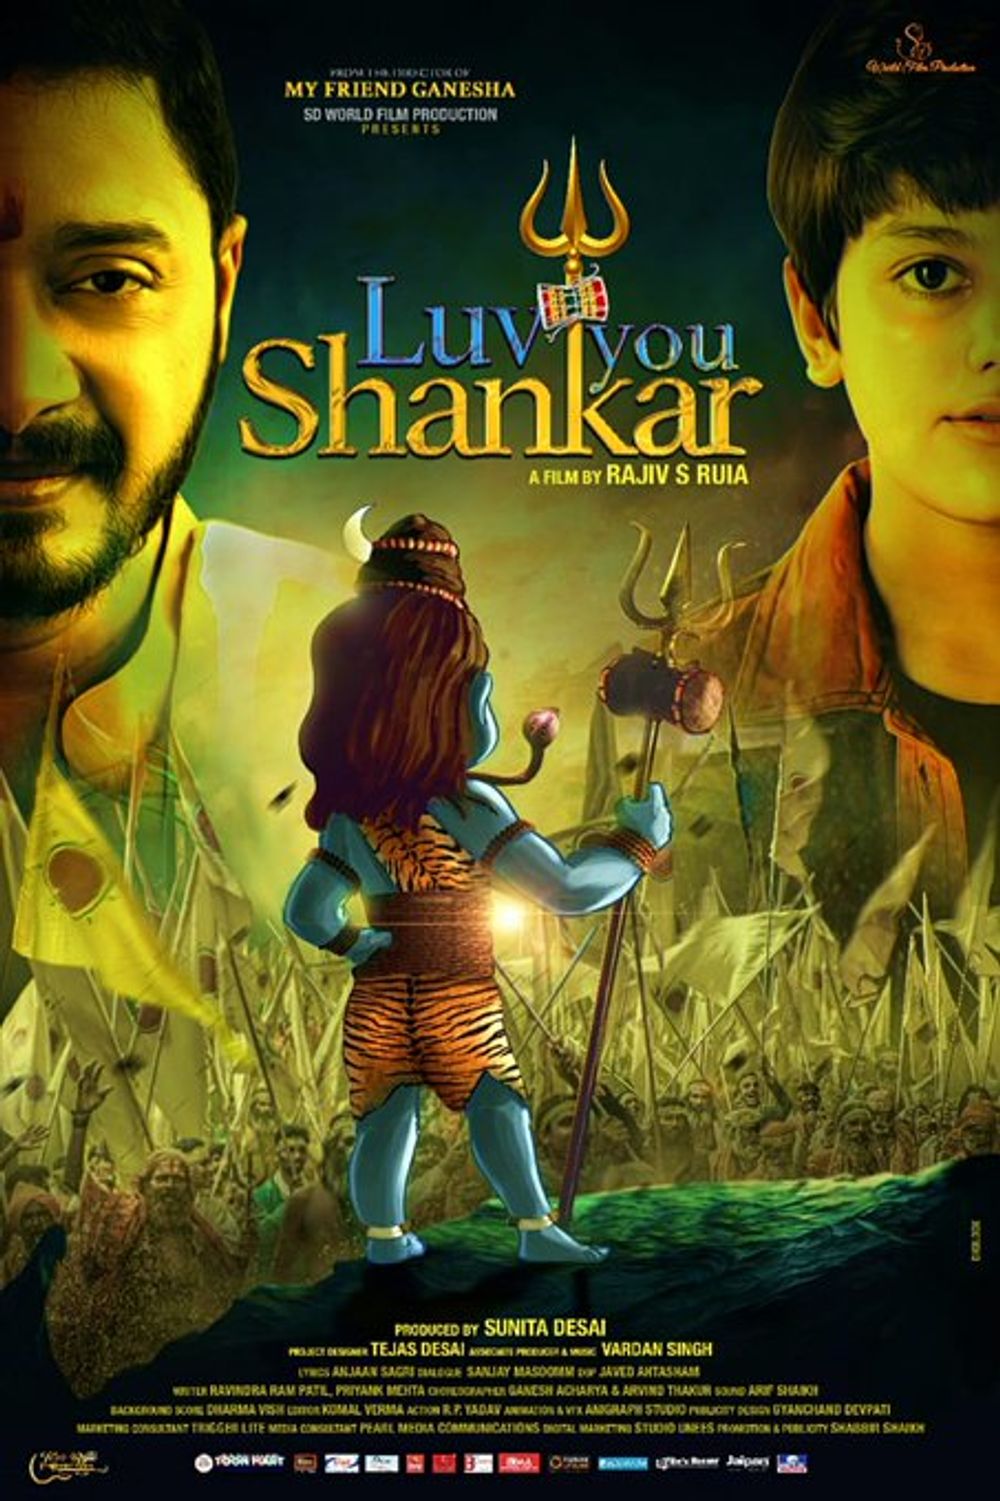 Luv You Shankar Movie Review